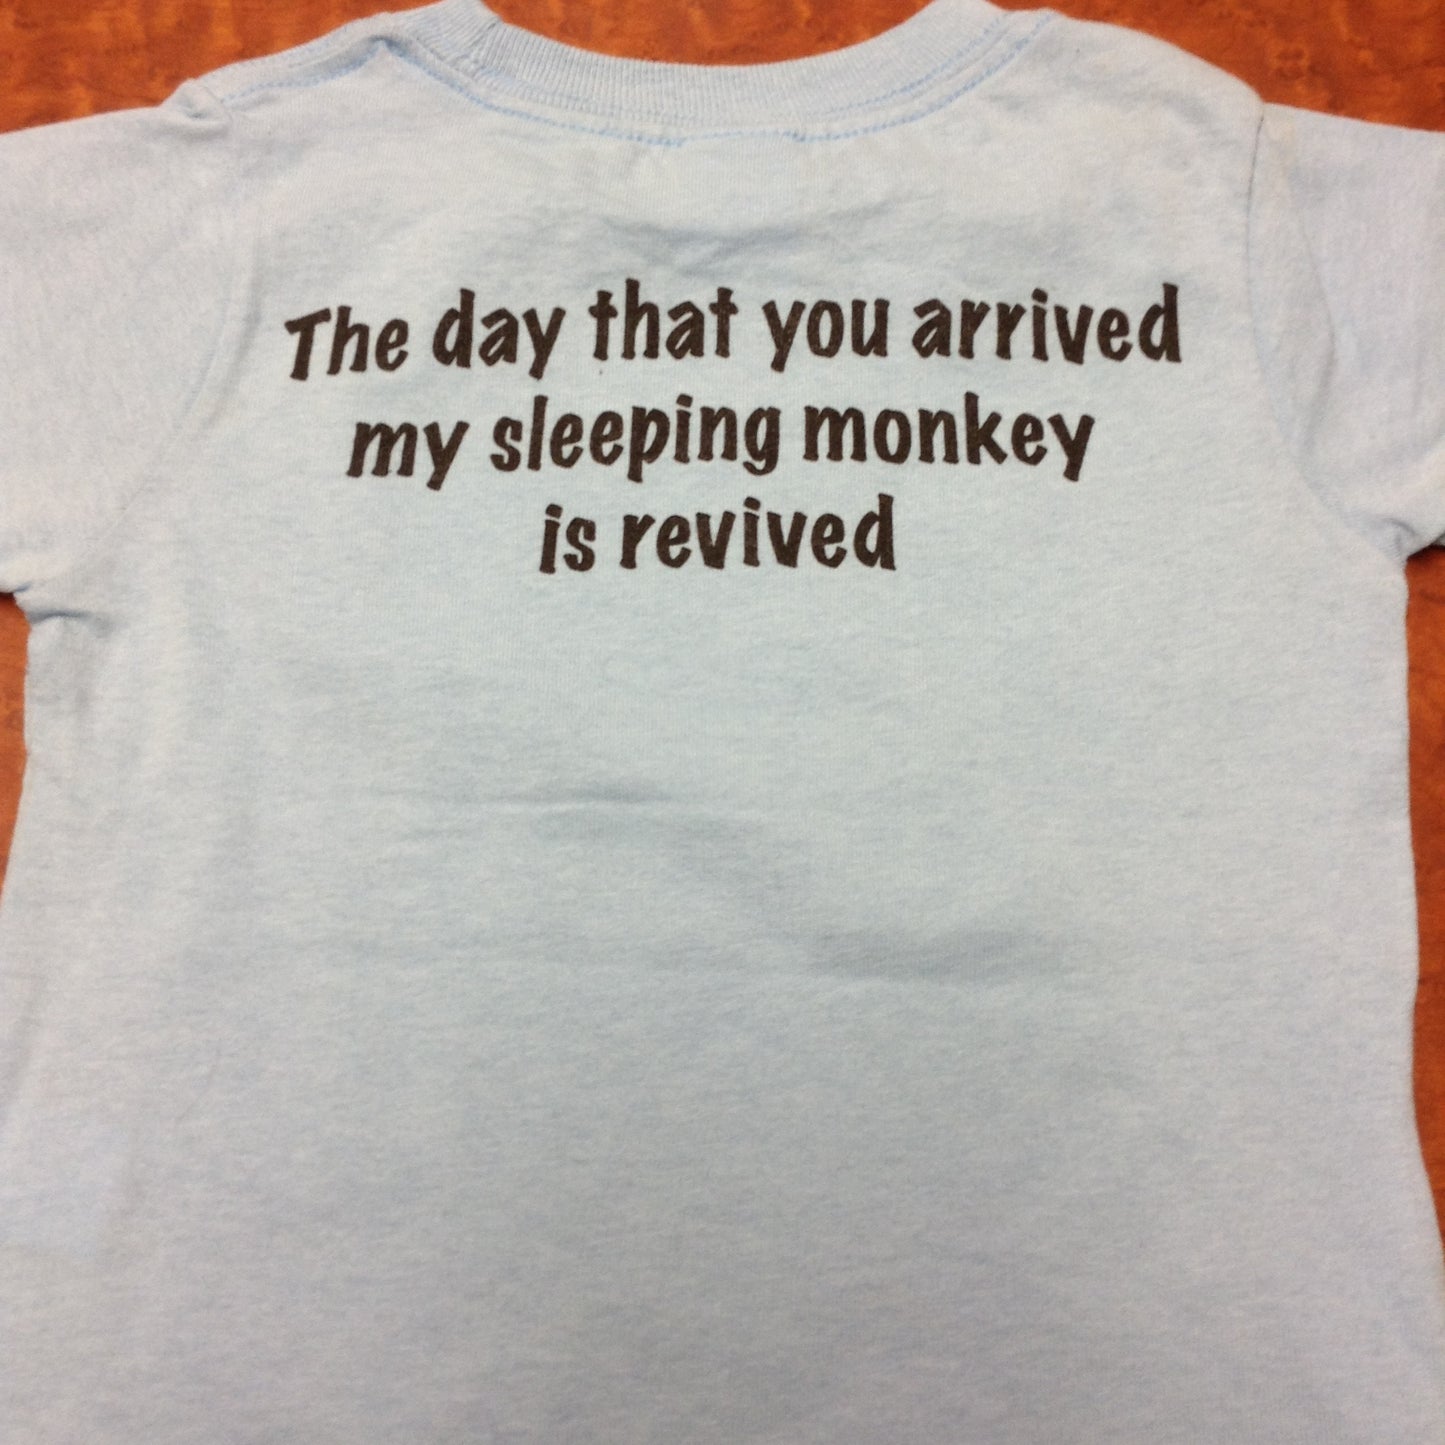 Phish Sleeping Monkey Youth T Shirt - HalfMoonMusic